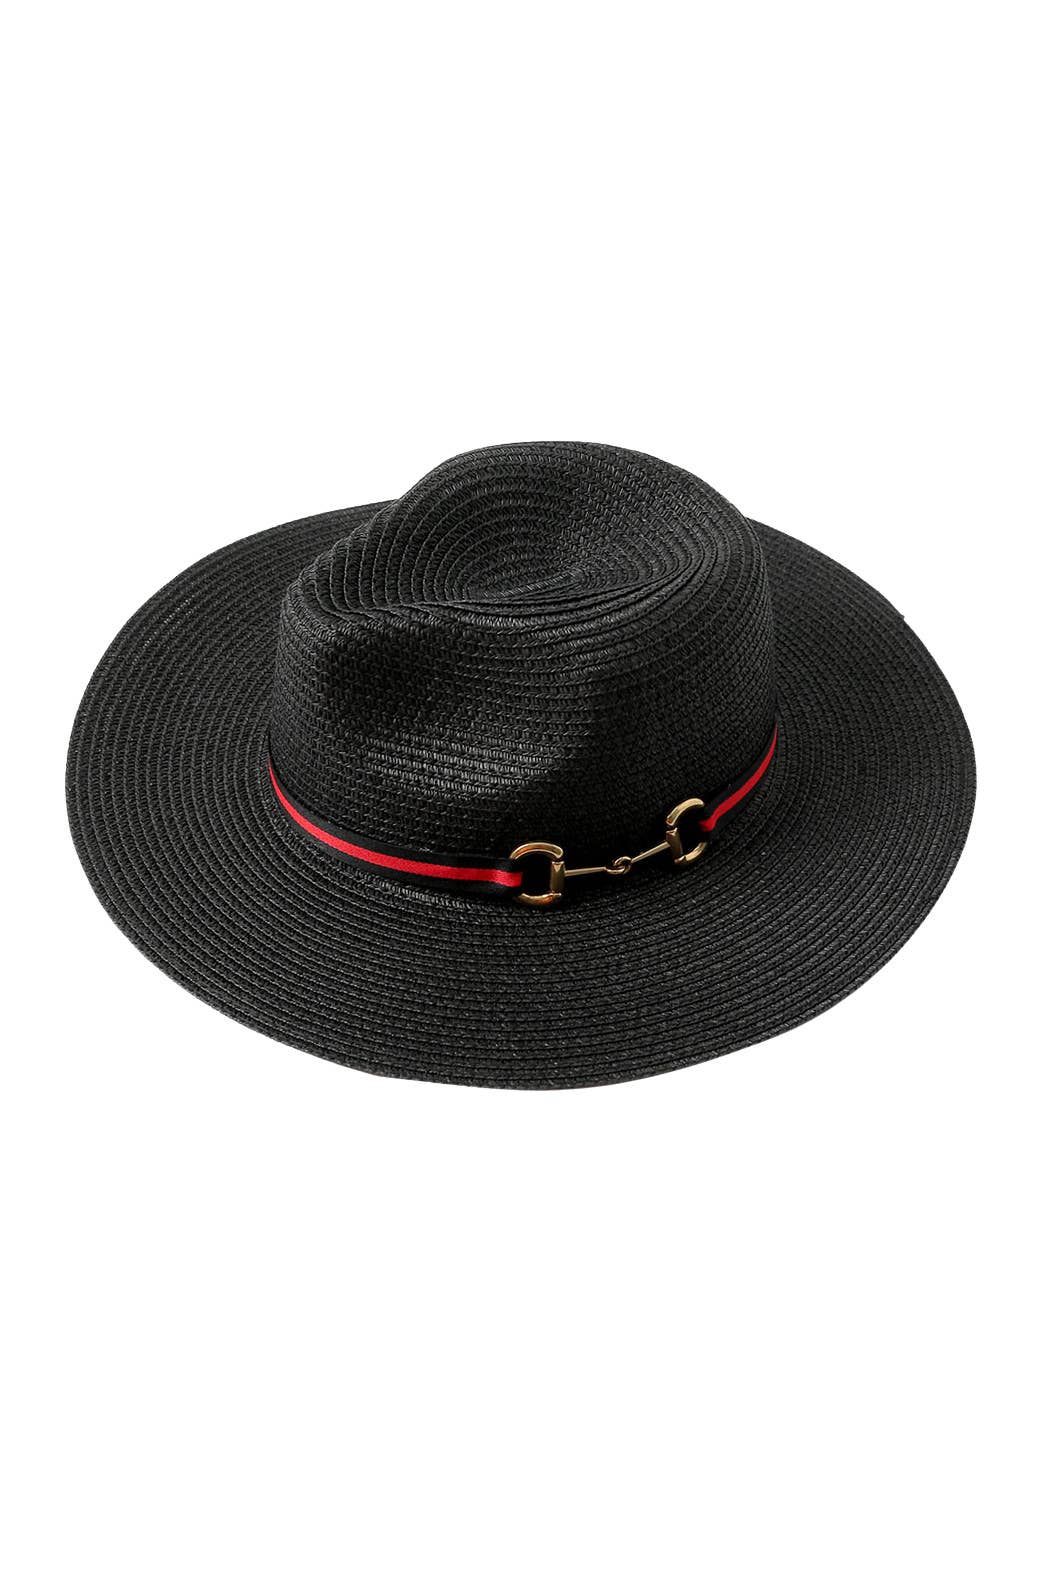 Embellish Your Life - Horse Bit Band Straw Hat